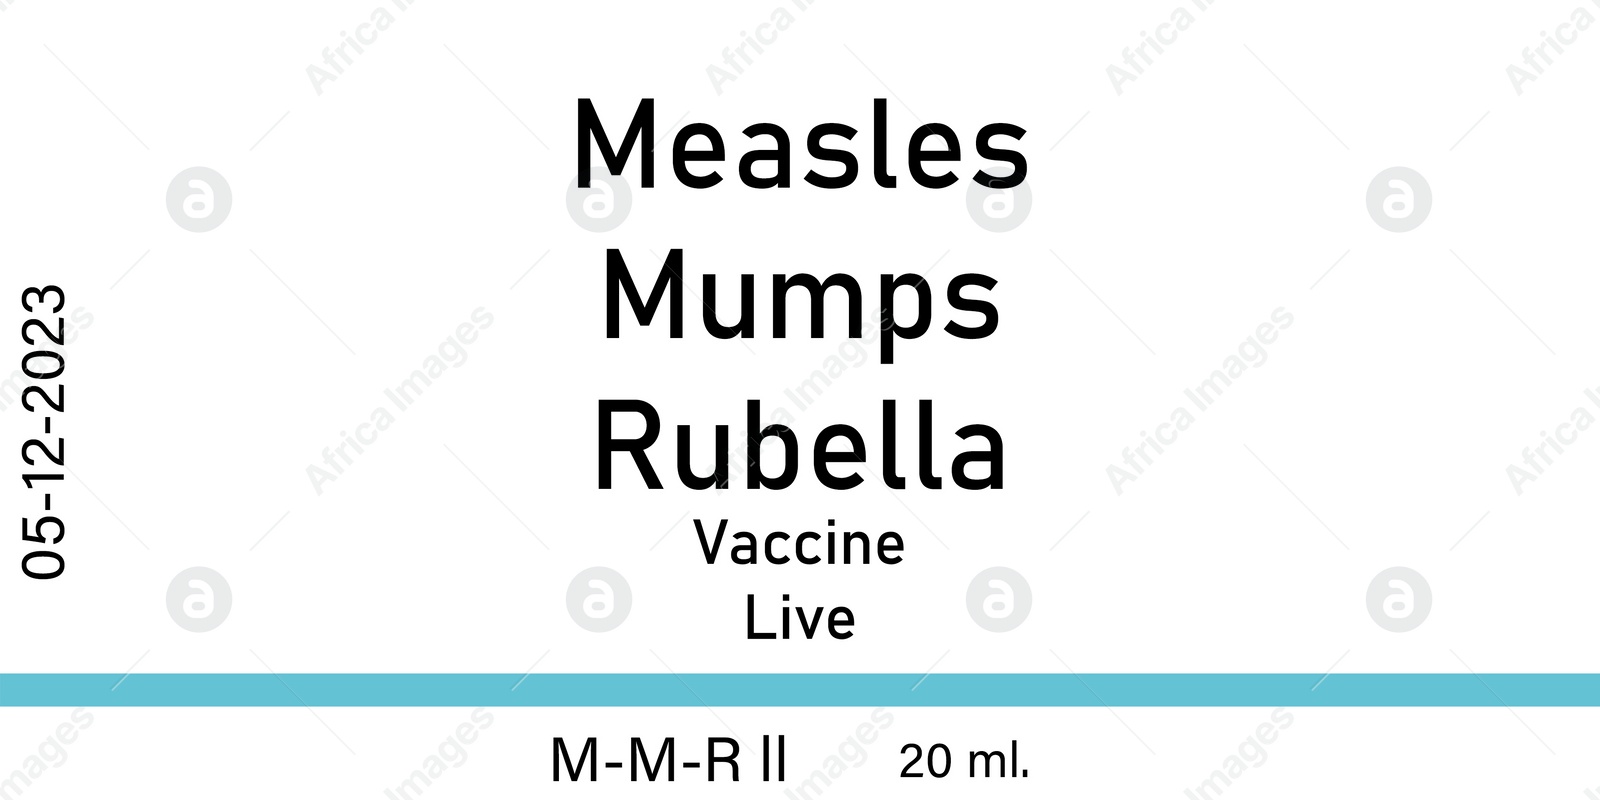 Illustration of Measles Mumps Rubella (MMR) vaccine label design